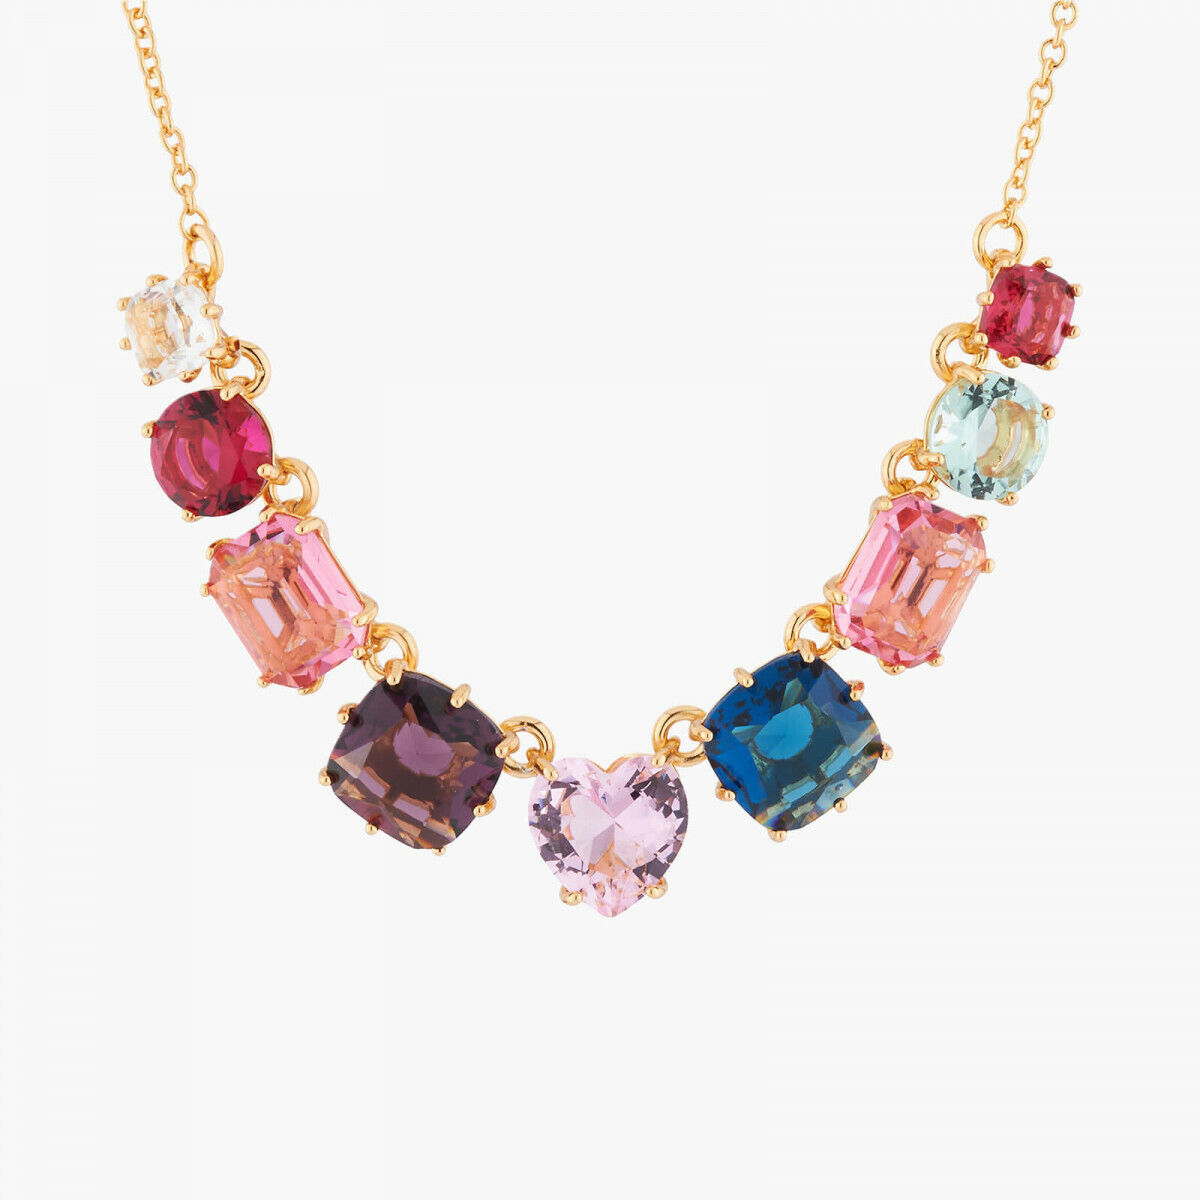 Les Nereides 9 multicolored stones thin necklace, 18K vergoldet Handmade, OVP